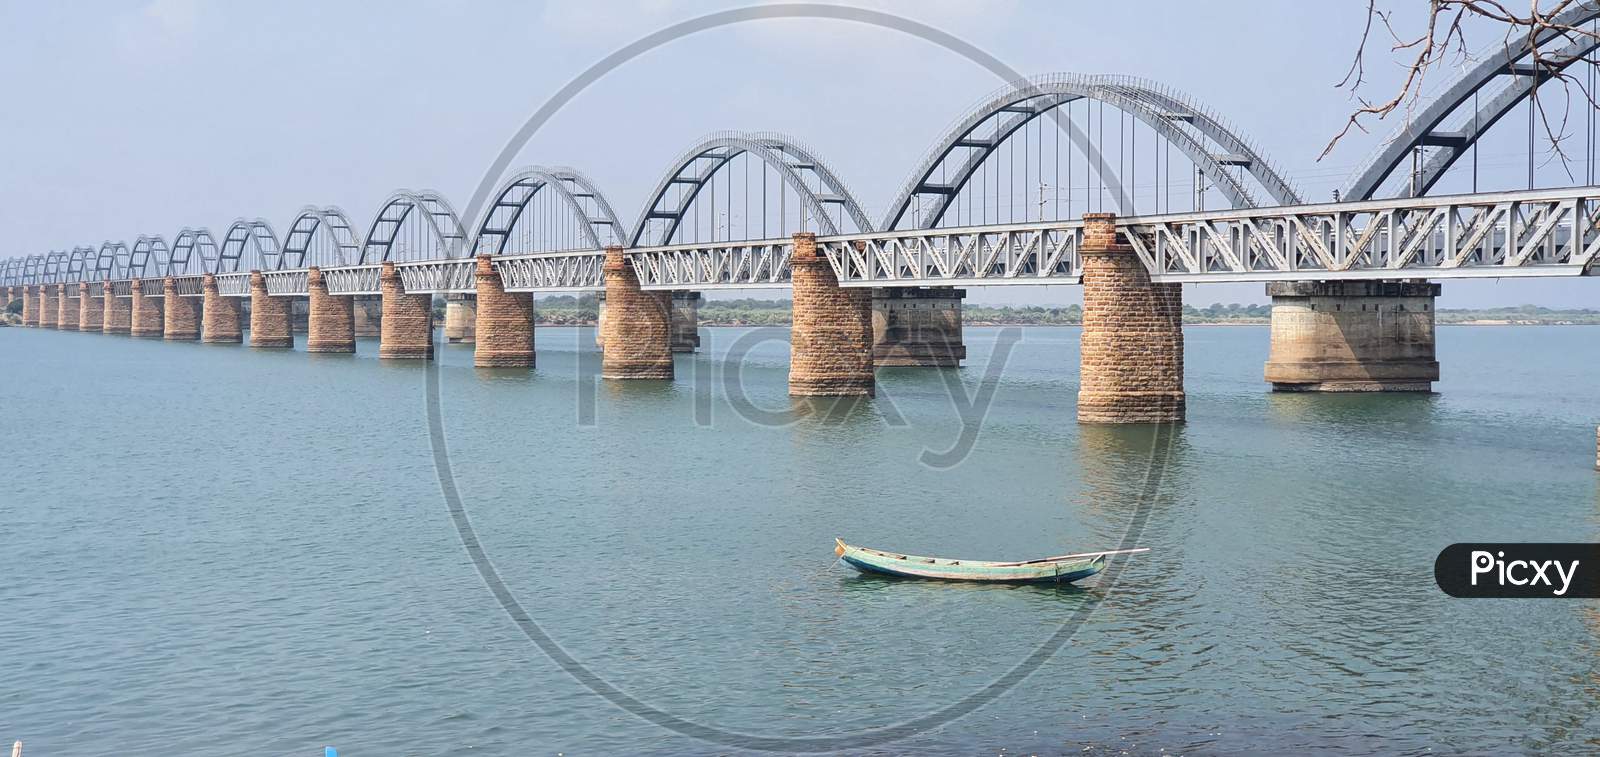 Scenic railway bridges across the Godavari river